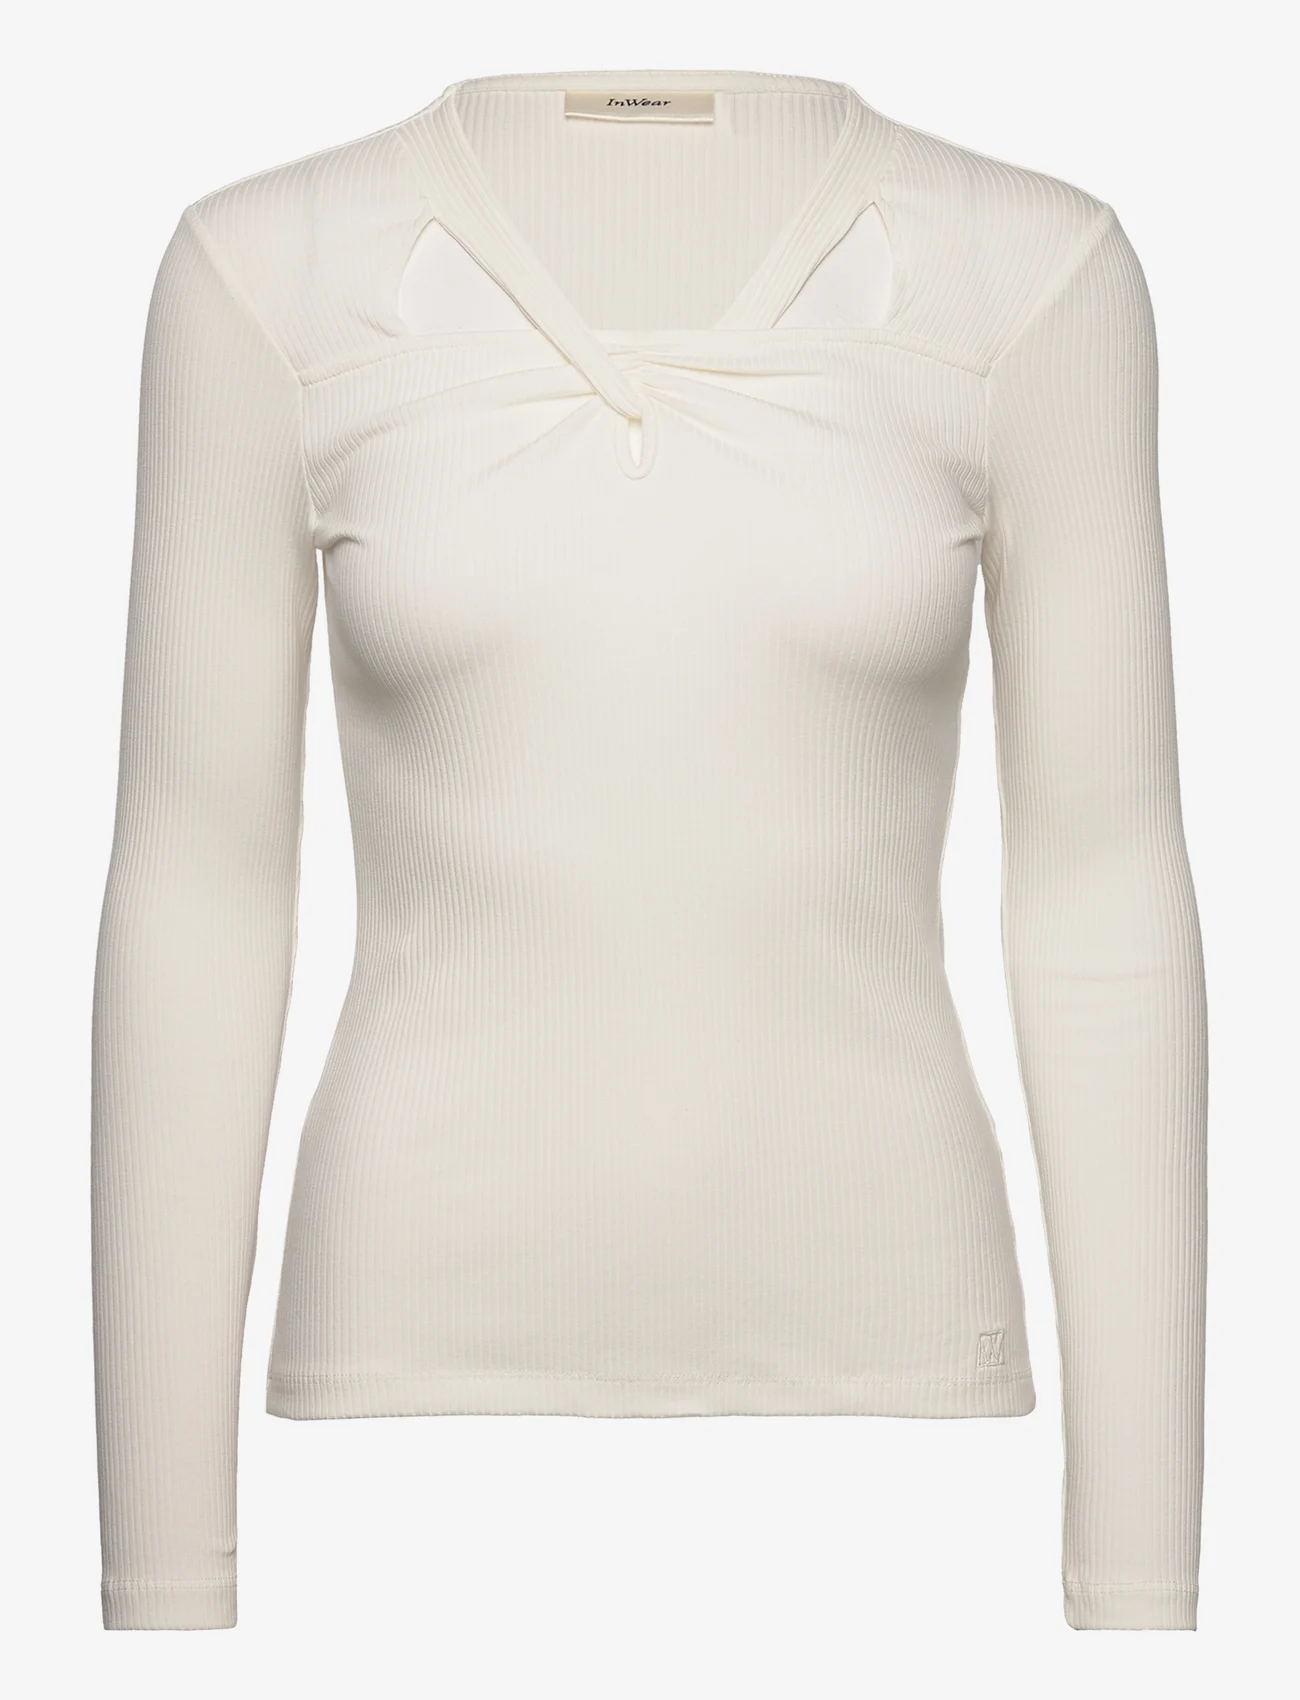 InWear - PukIW Long Sleeve - langærmede skjorter - whisper white - 0